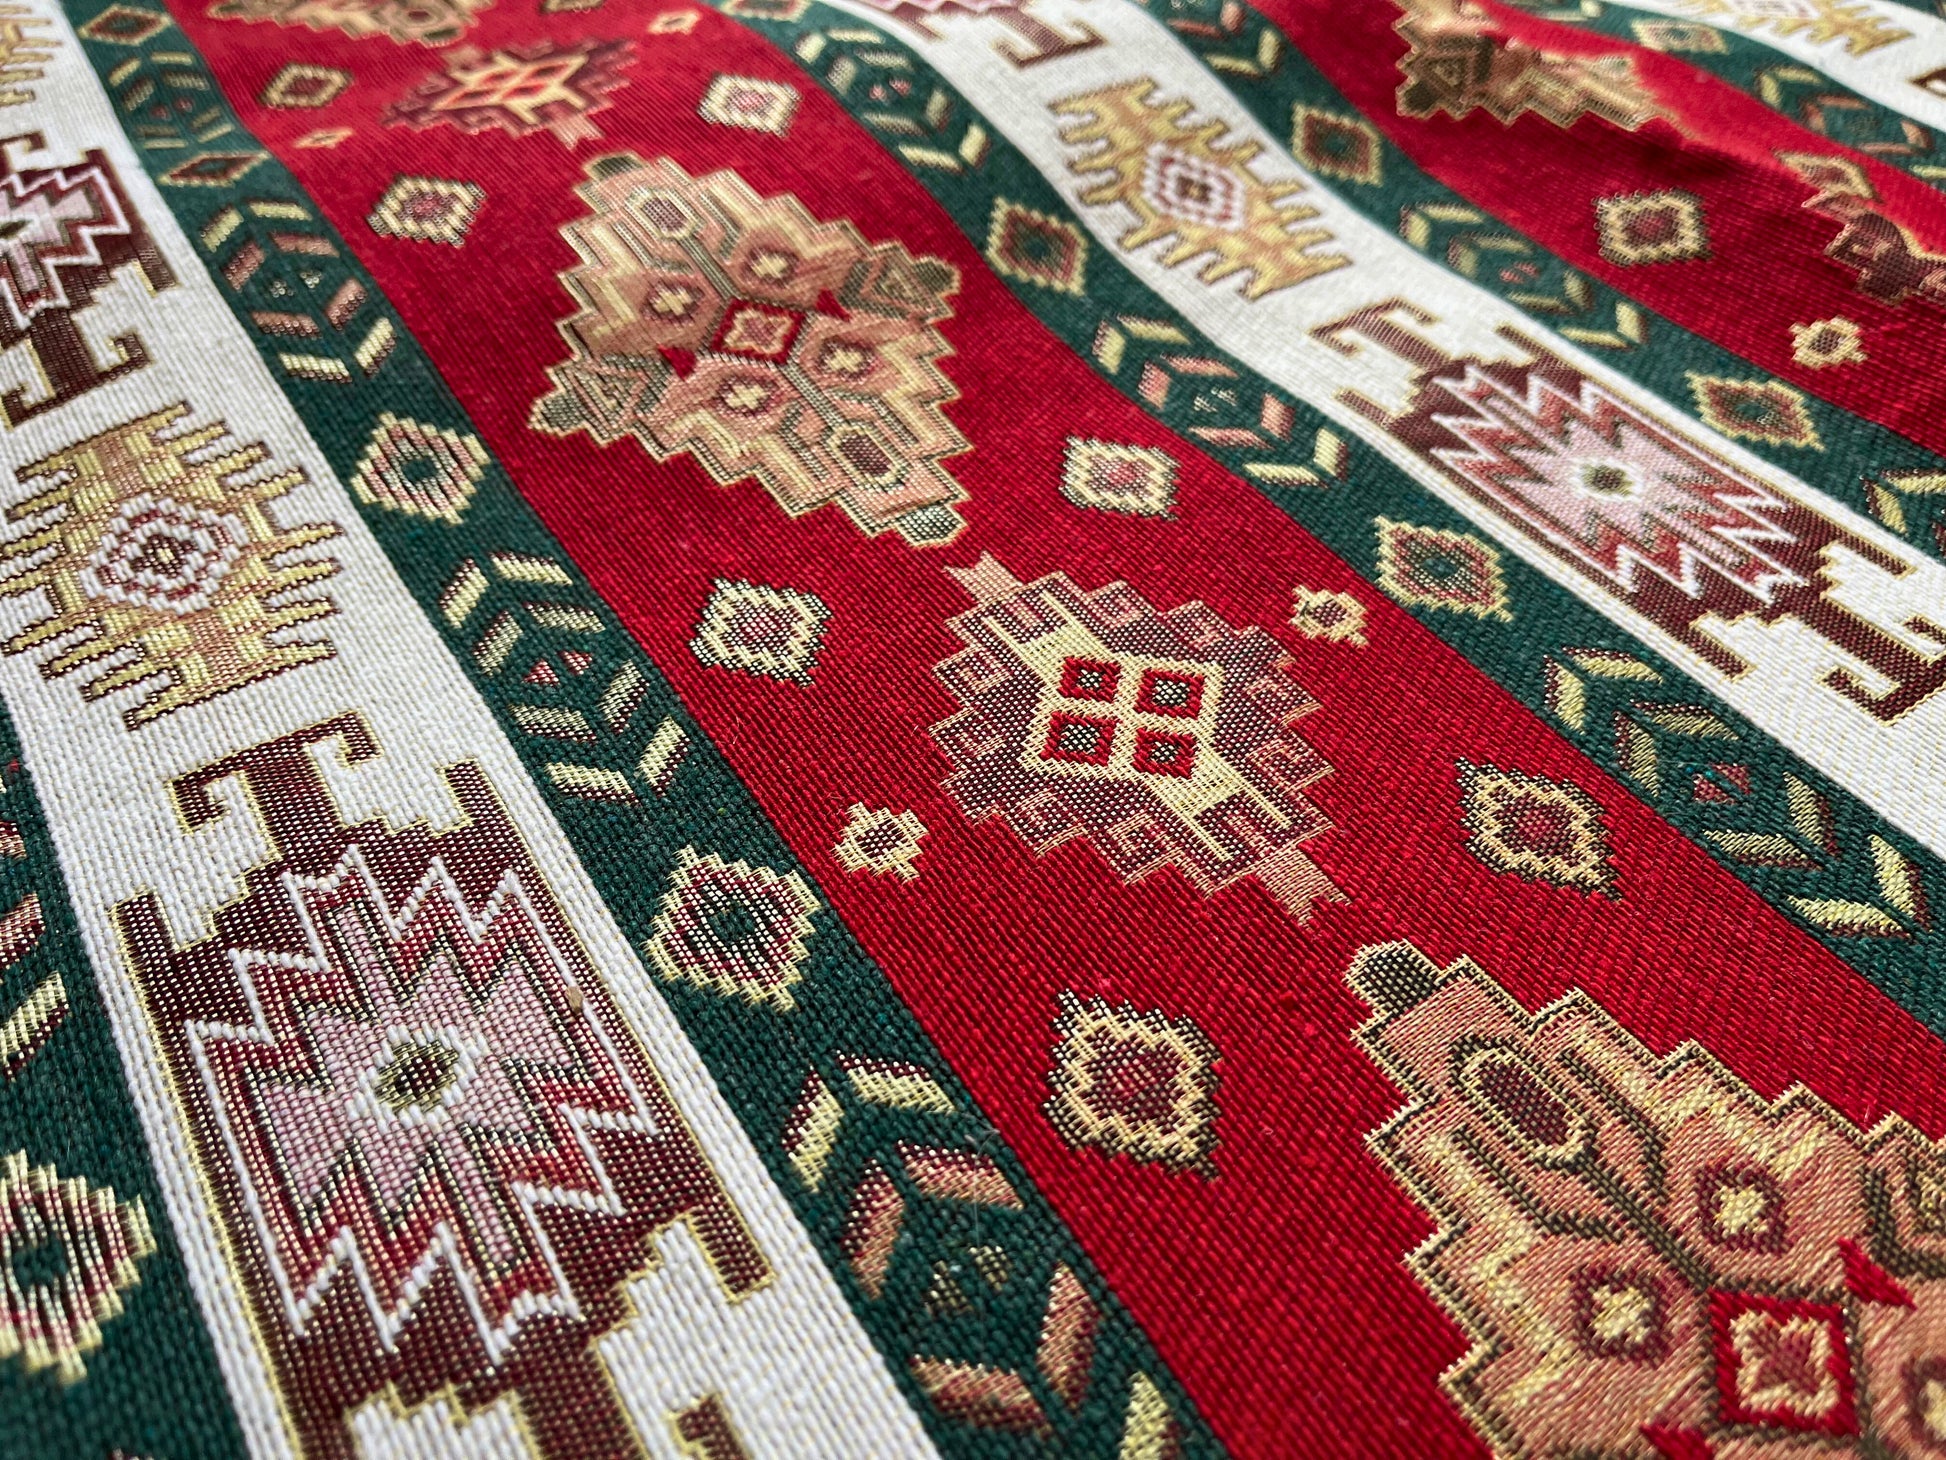 The Nomadic Elegance Prayer Mat, made by Christian Refugees in Georgia